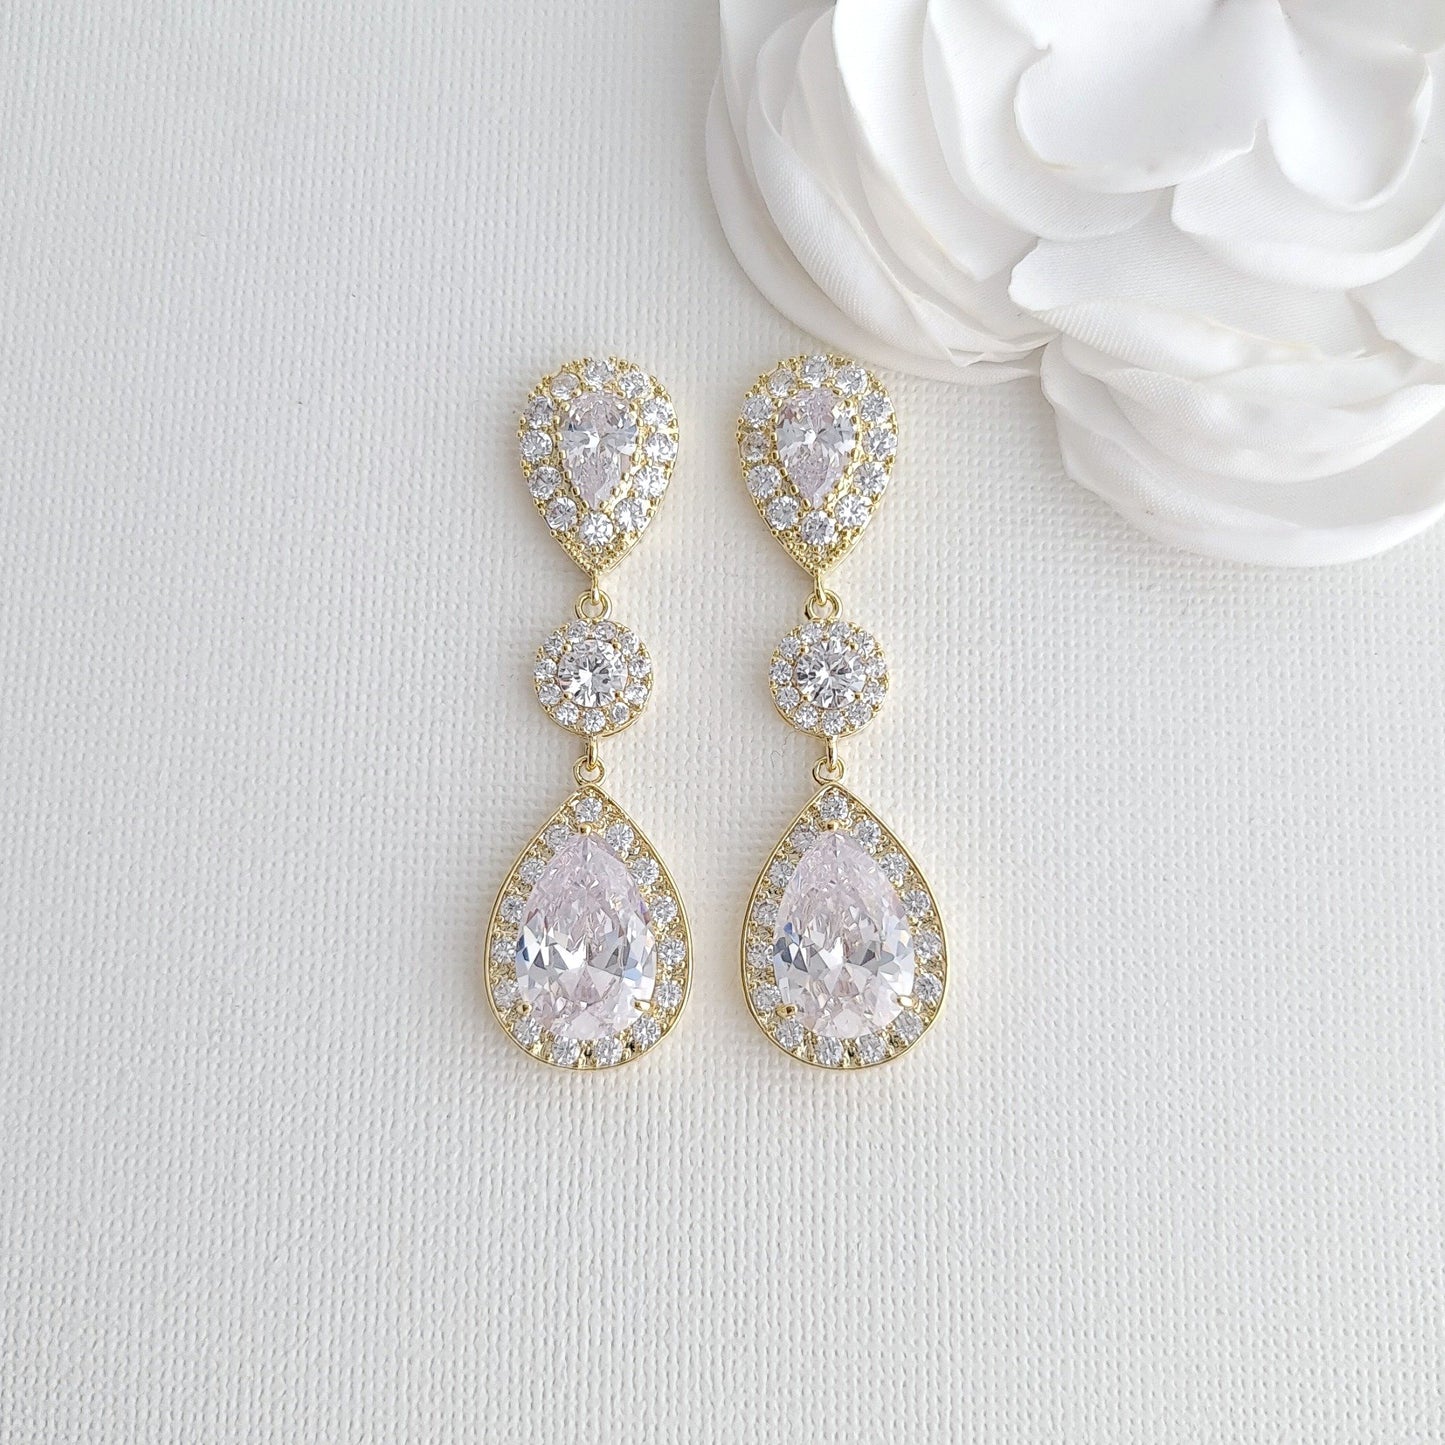 Big Wedding Earrings with Large CZ Teardrops-Penelope - PoetryDesigns